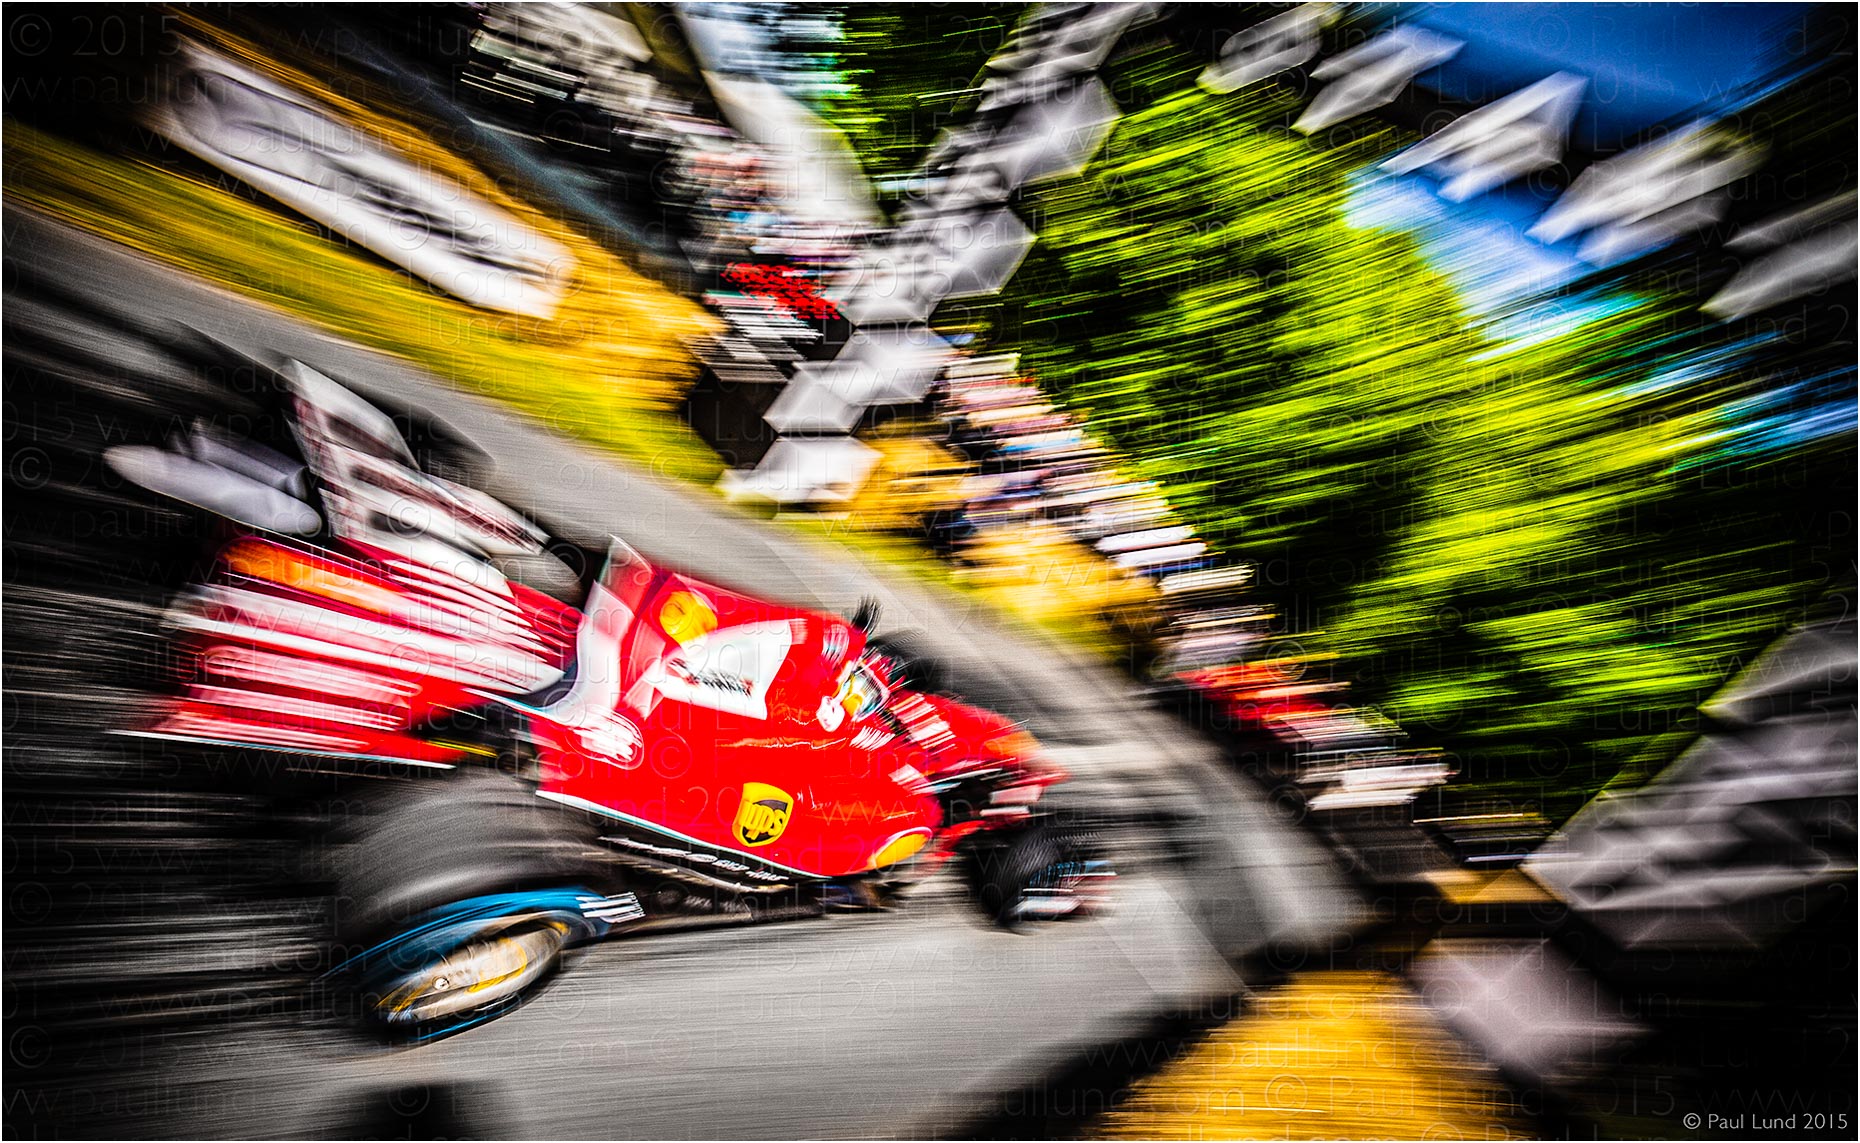 Ferrari F10 - Driver: Marc Gene at Goodwood Festival of Speed 2015. Photographer: Paul Lund